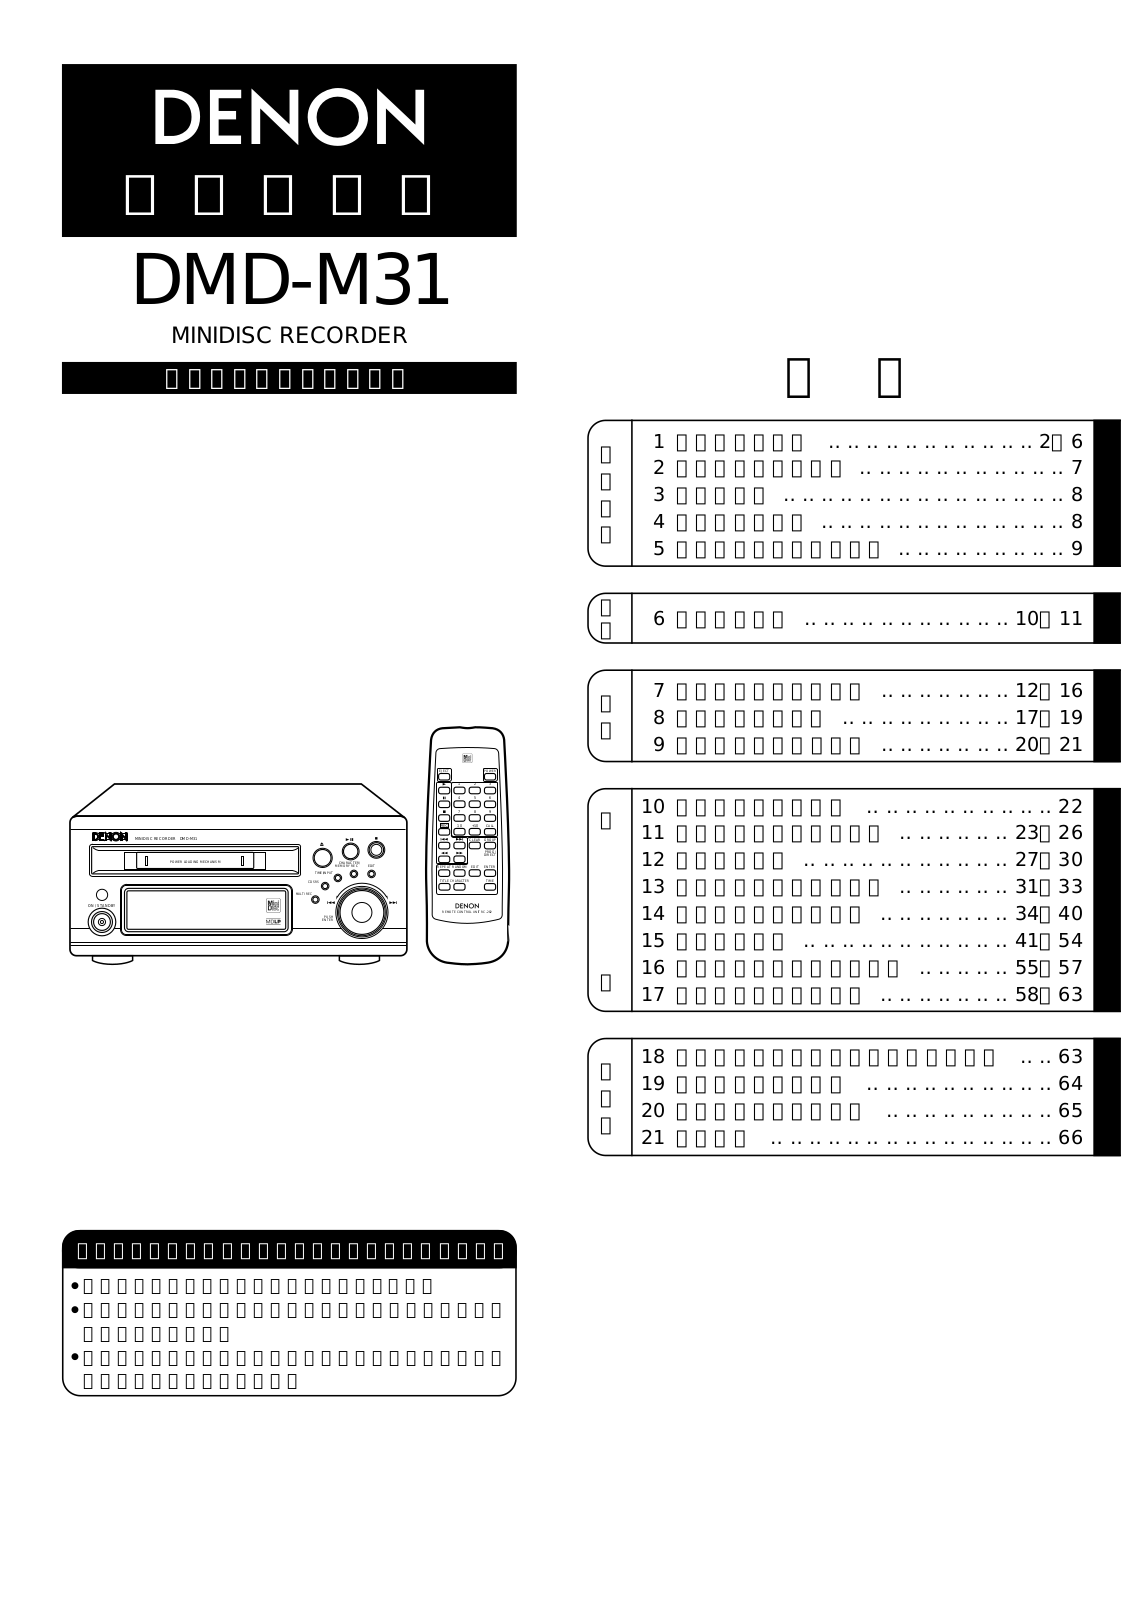 Denon DMD-M31 Owner's Manual